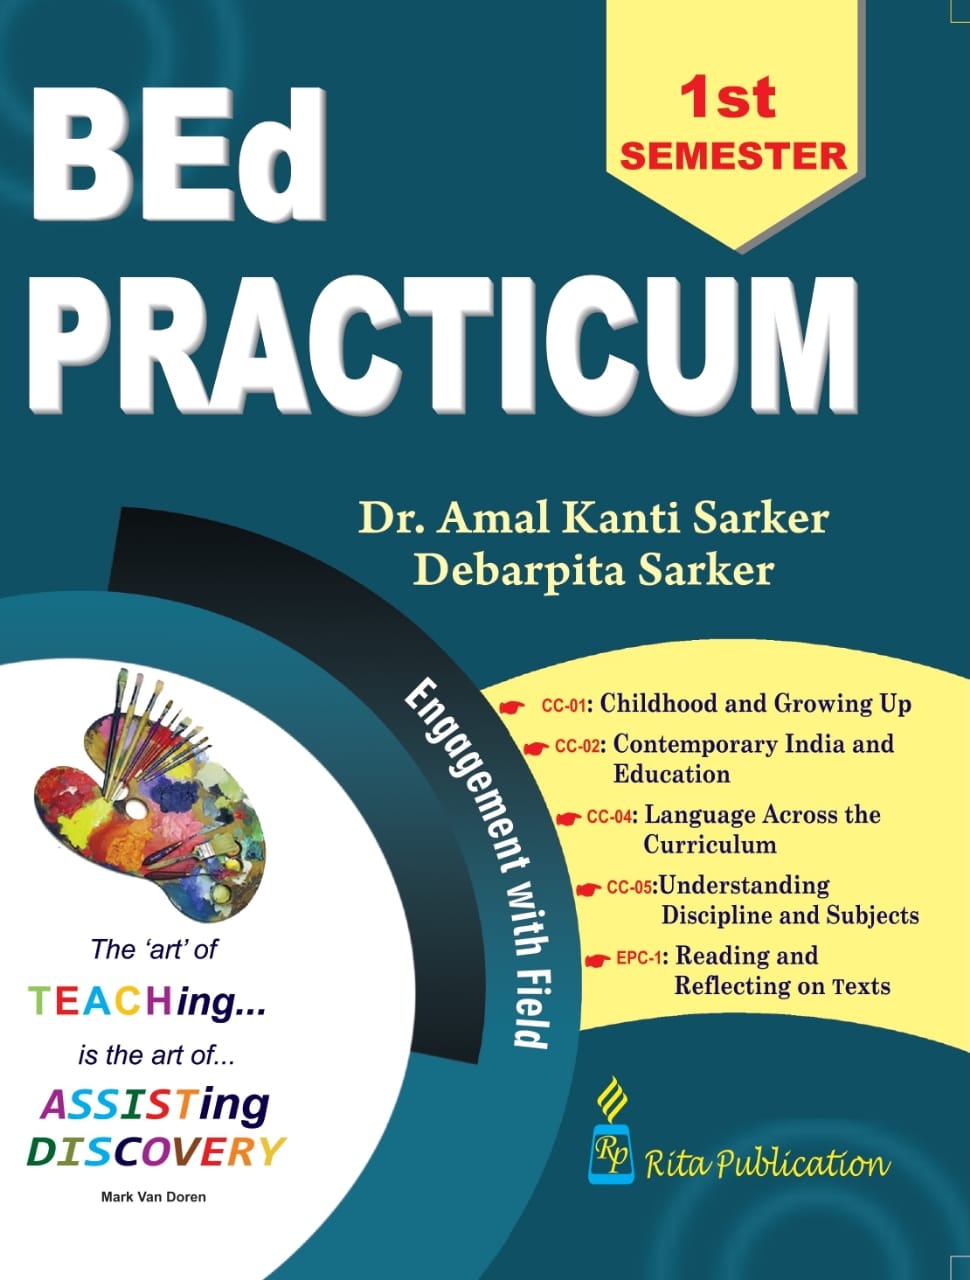 b.ed practicum1st semester Dr Amal kanti Sarker Aaheli Publishers 2022-23